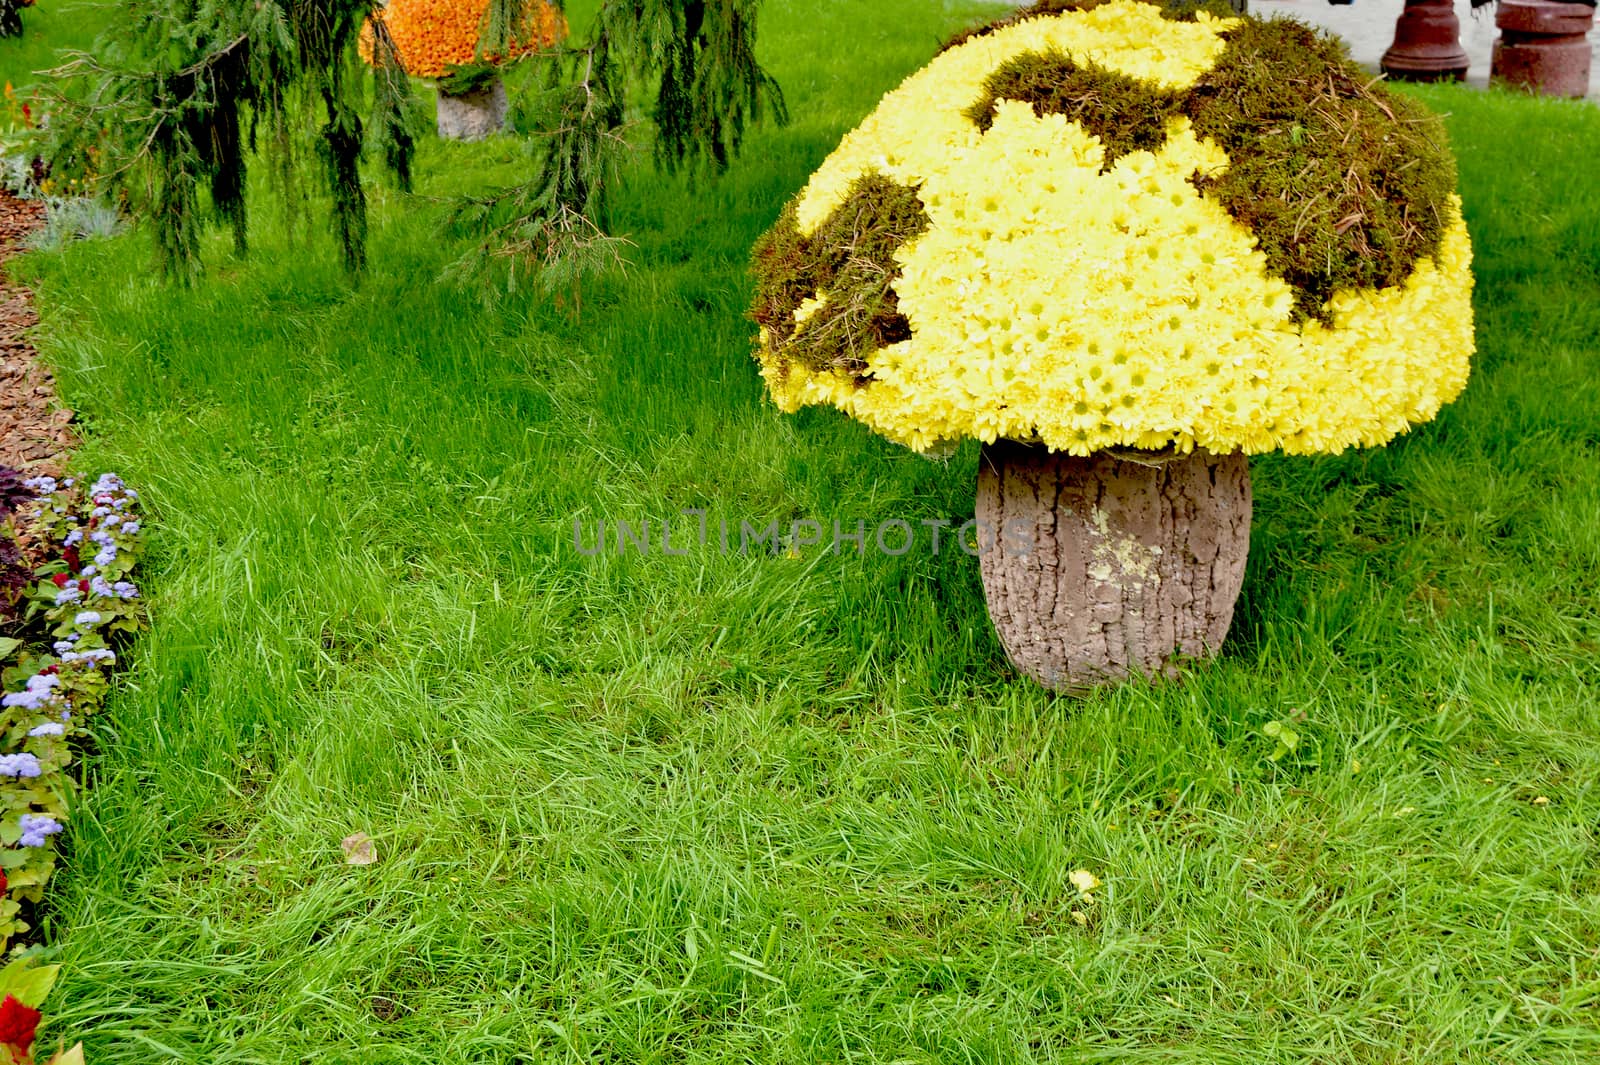 Mushroom, made of flowers beautiful garden design.